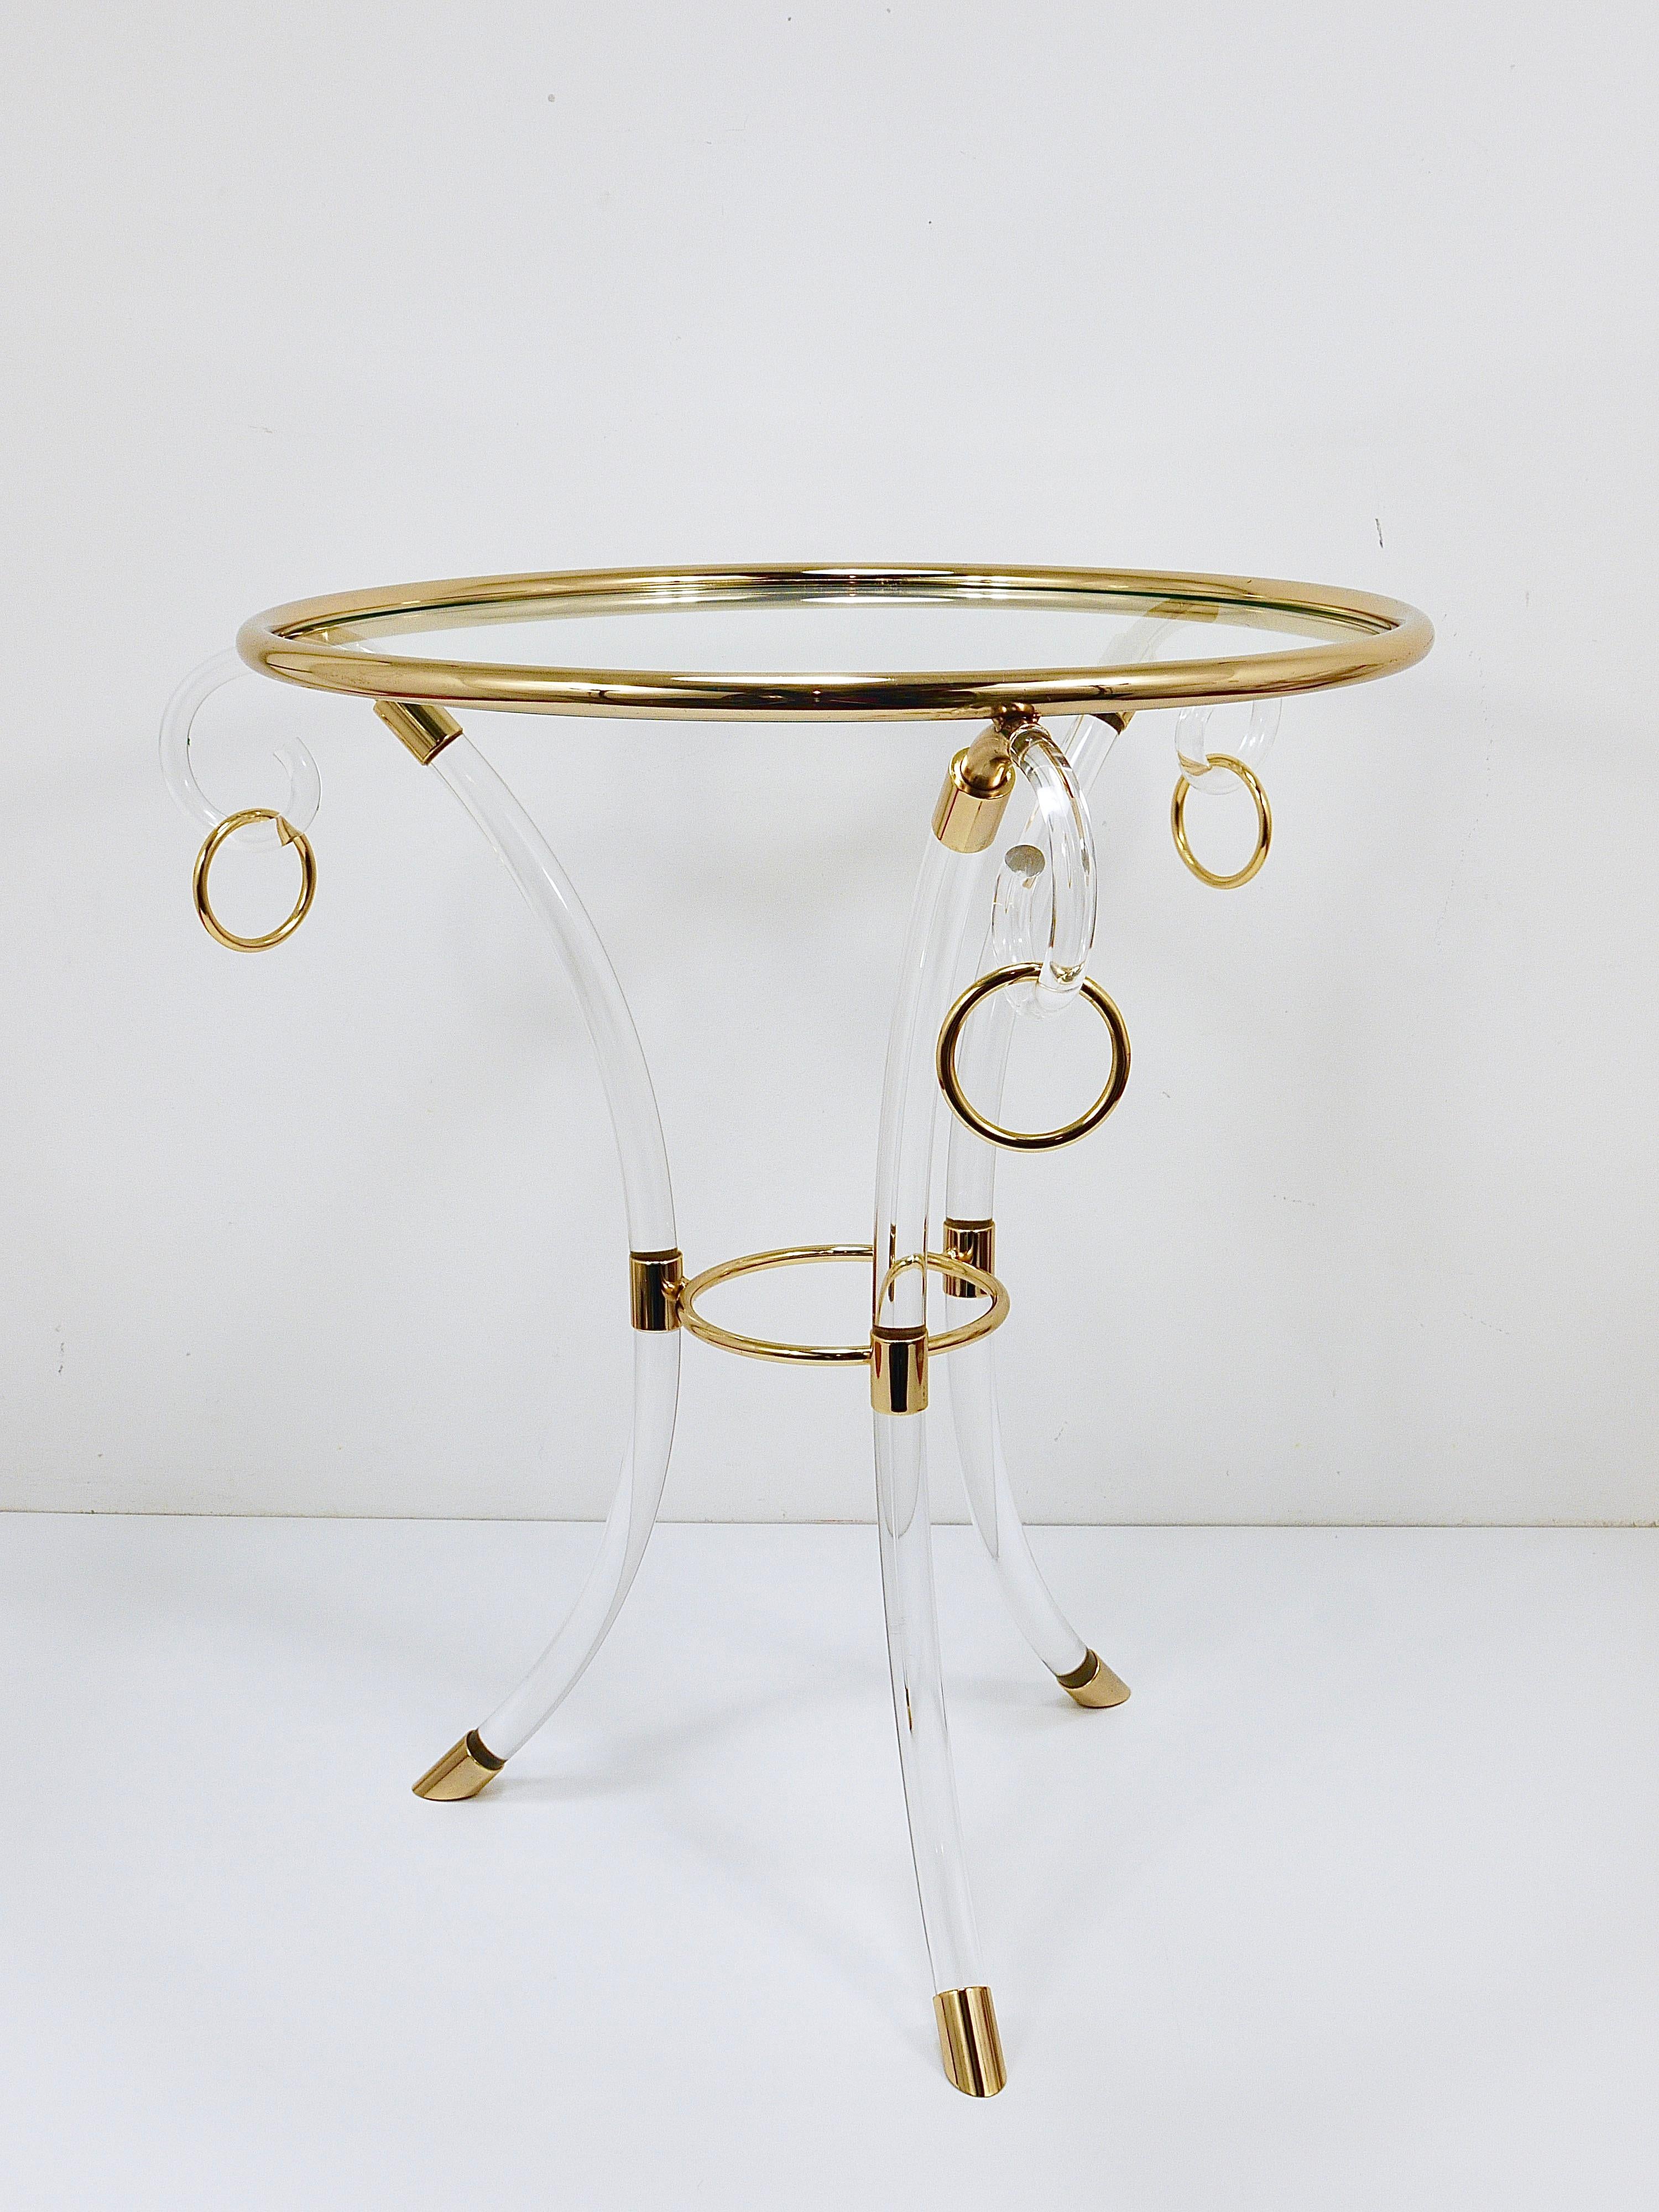 French Maison Jansen Style Lucite & Gilt Metal Tripod Coffee Table Pedestal Gueridon For Sale